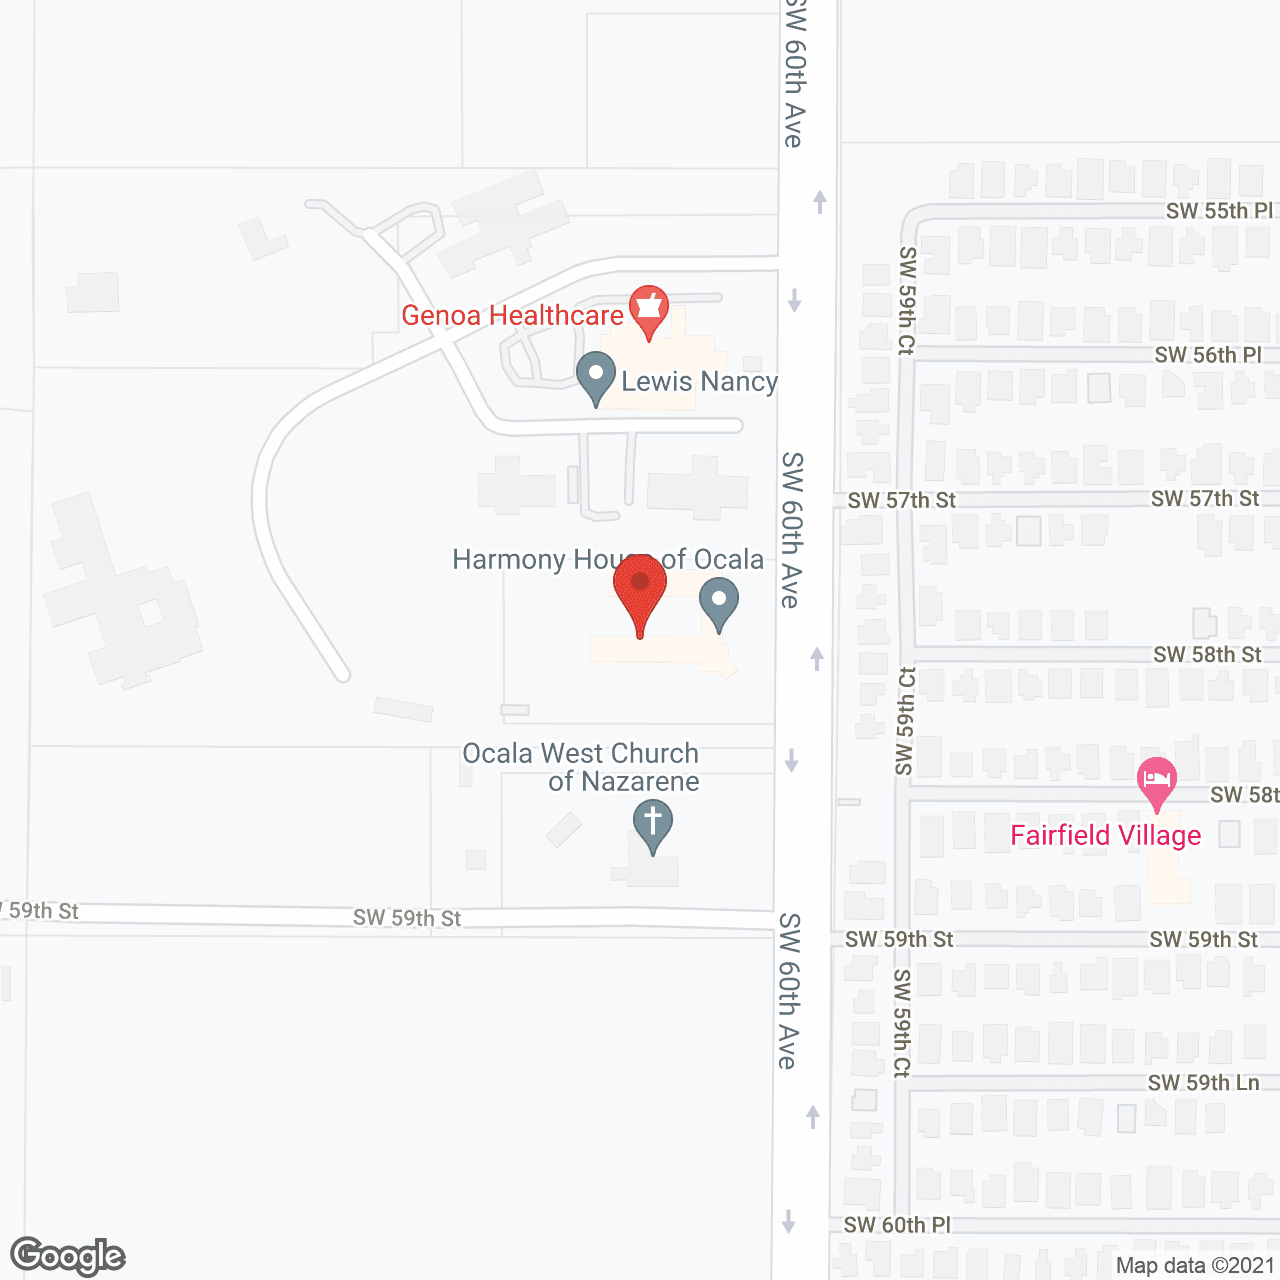 The Harmony House of Ocala in google map